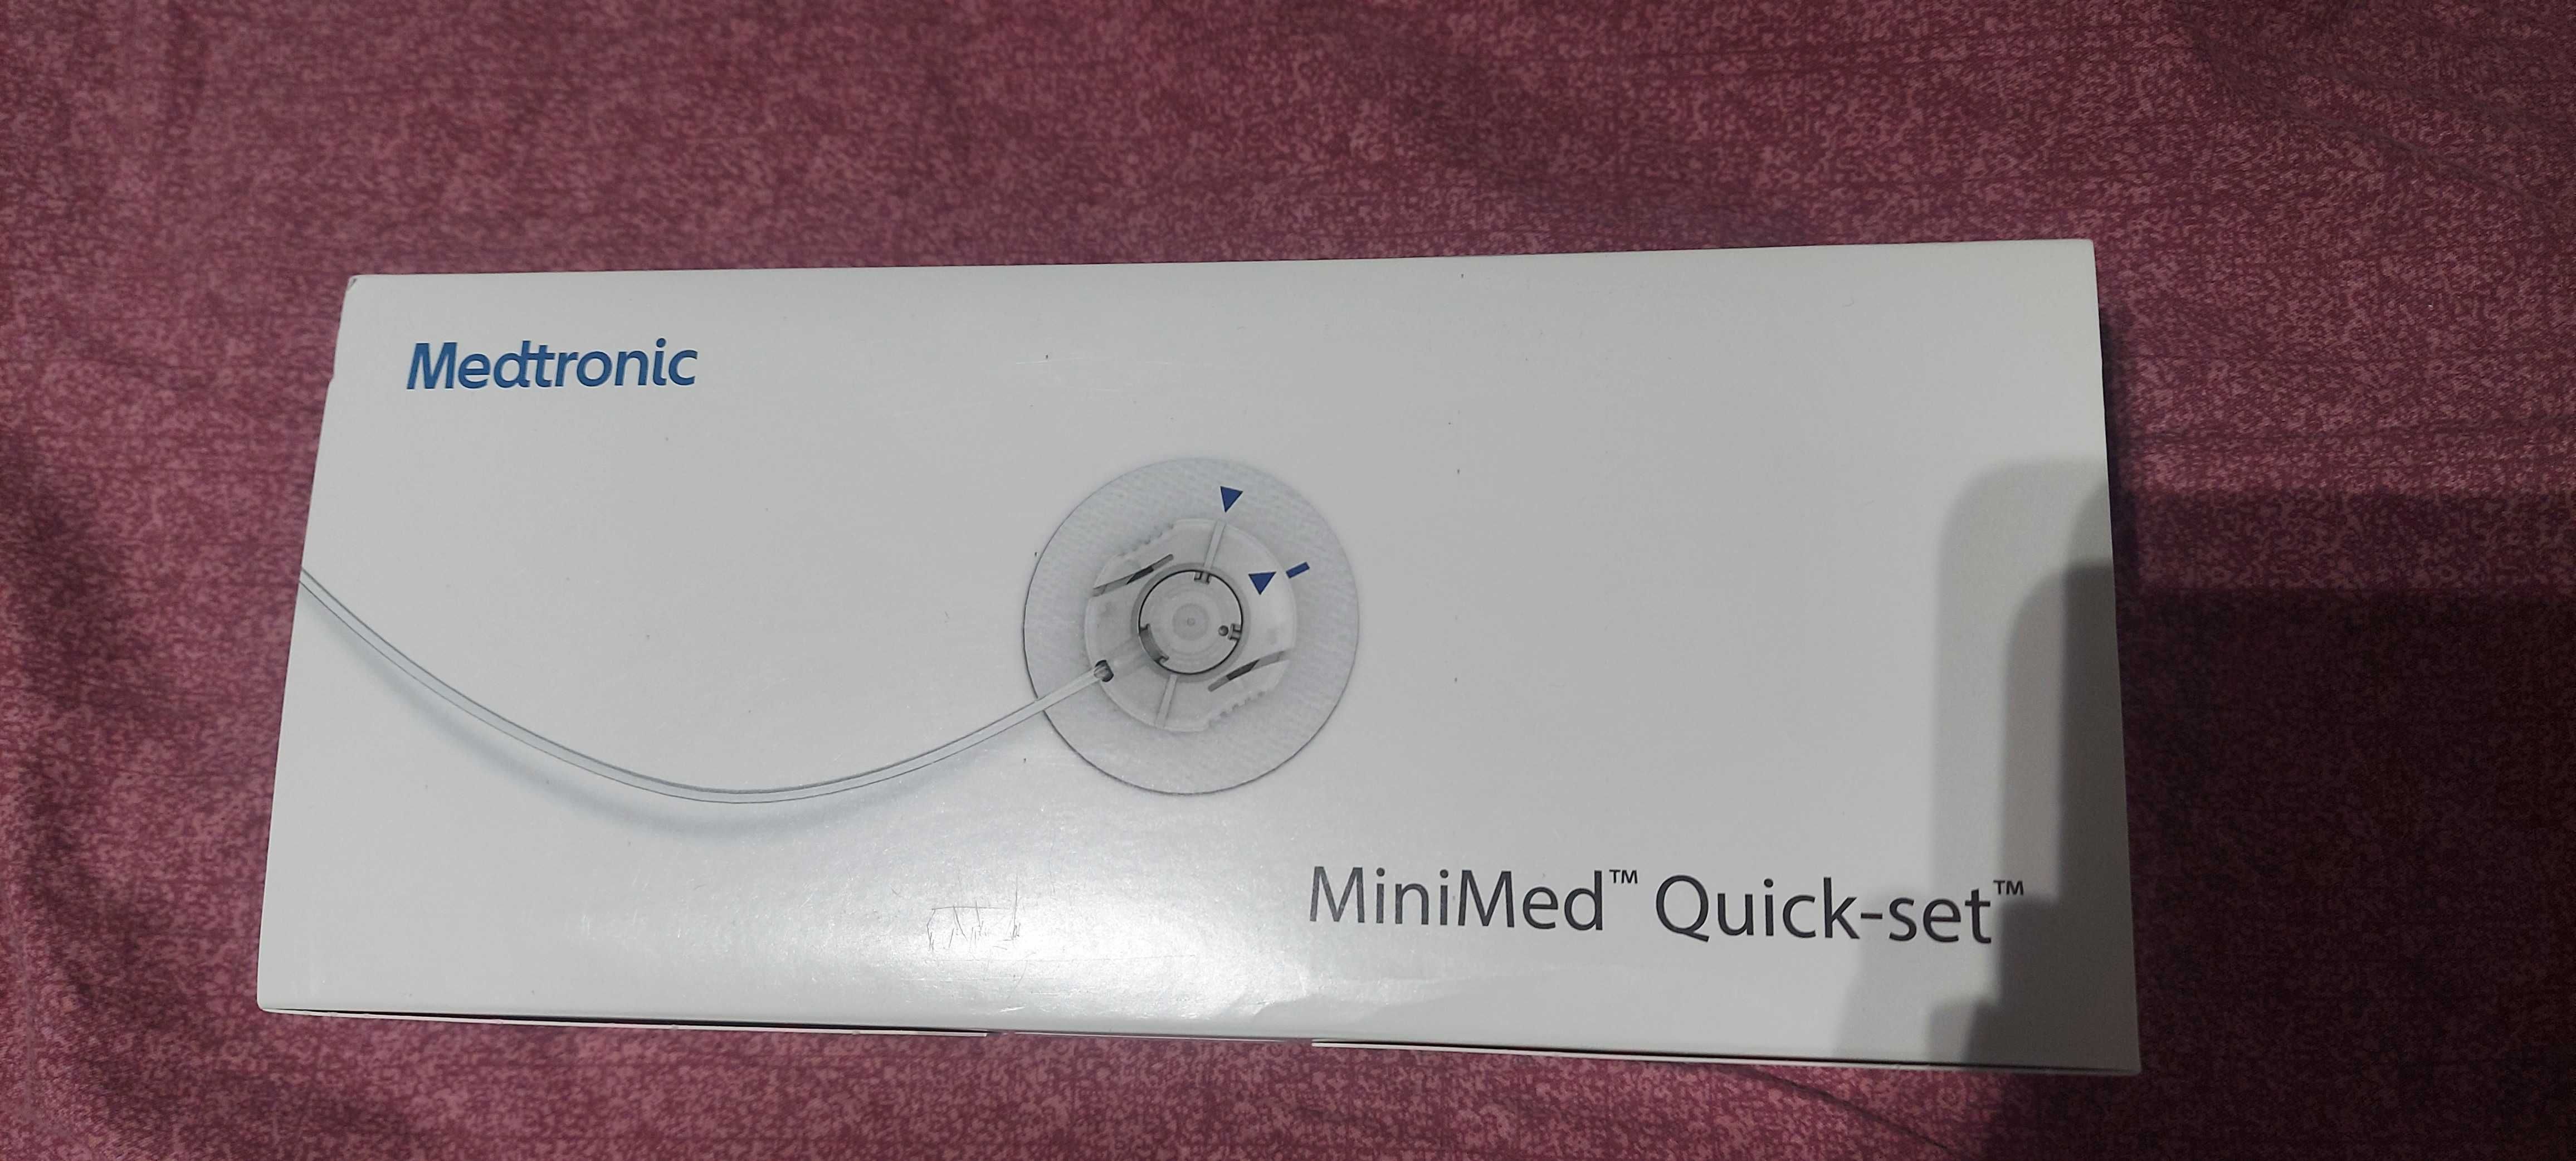 Zestaw infuzyjny MiniMed Quick-set do pomp Medtronic MiniMed